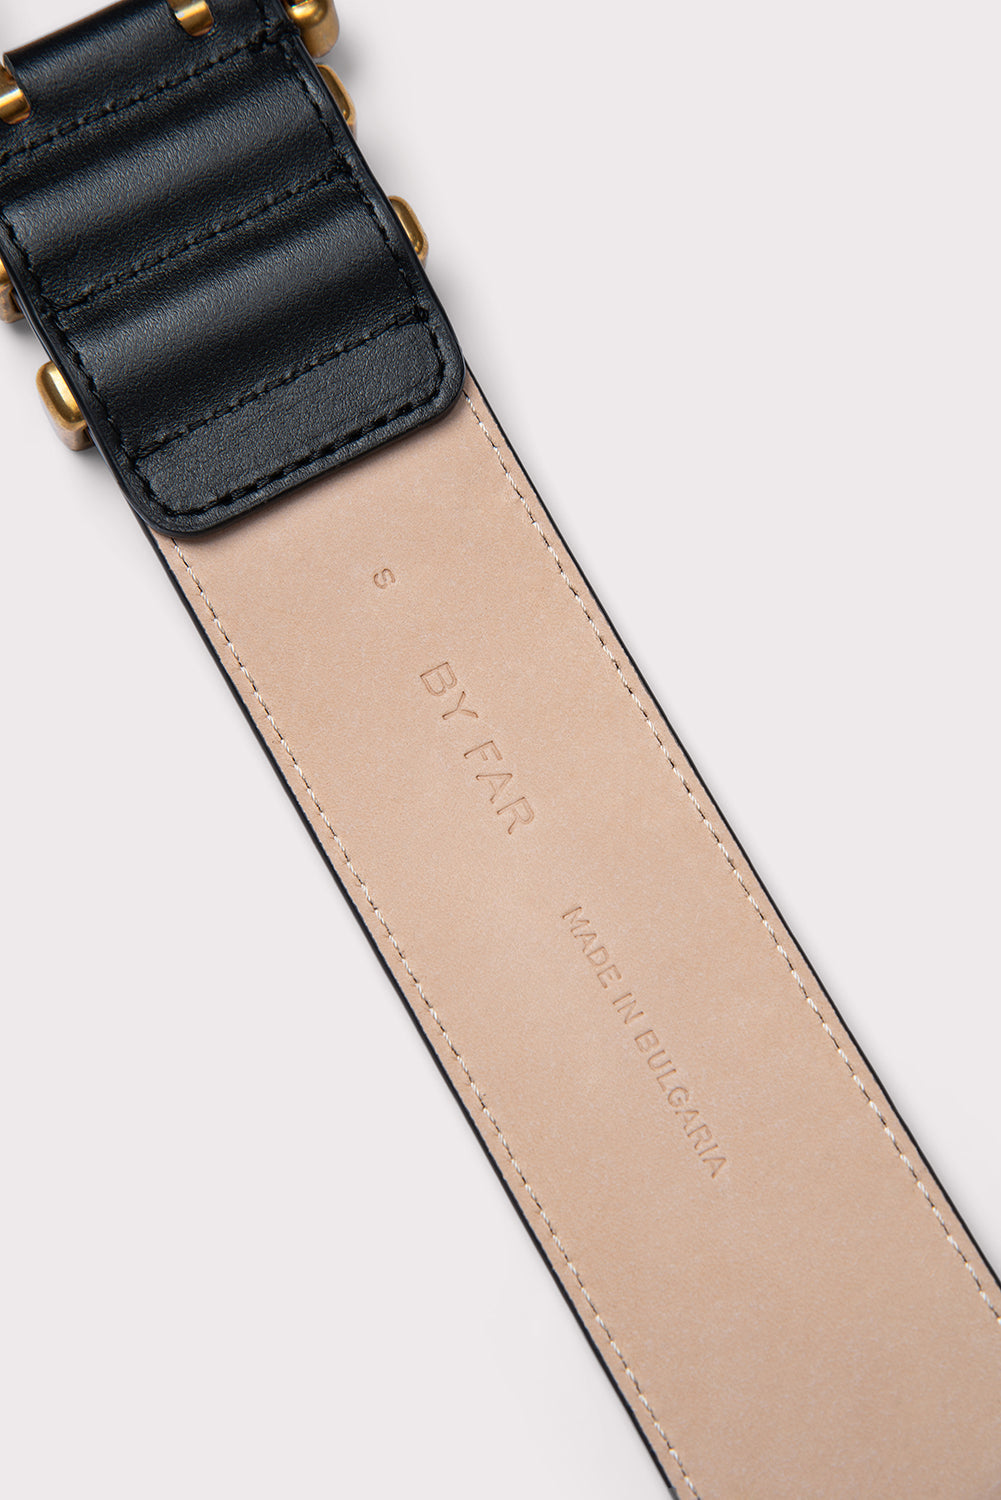 Duo Belt - by Far - Grey - Croc Leather